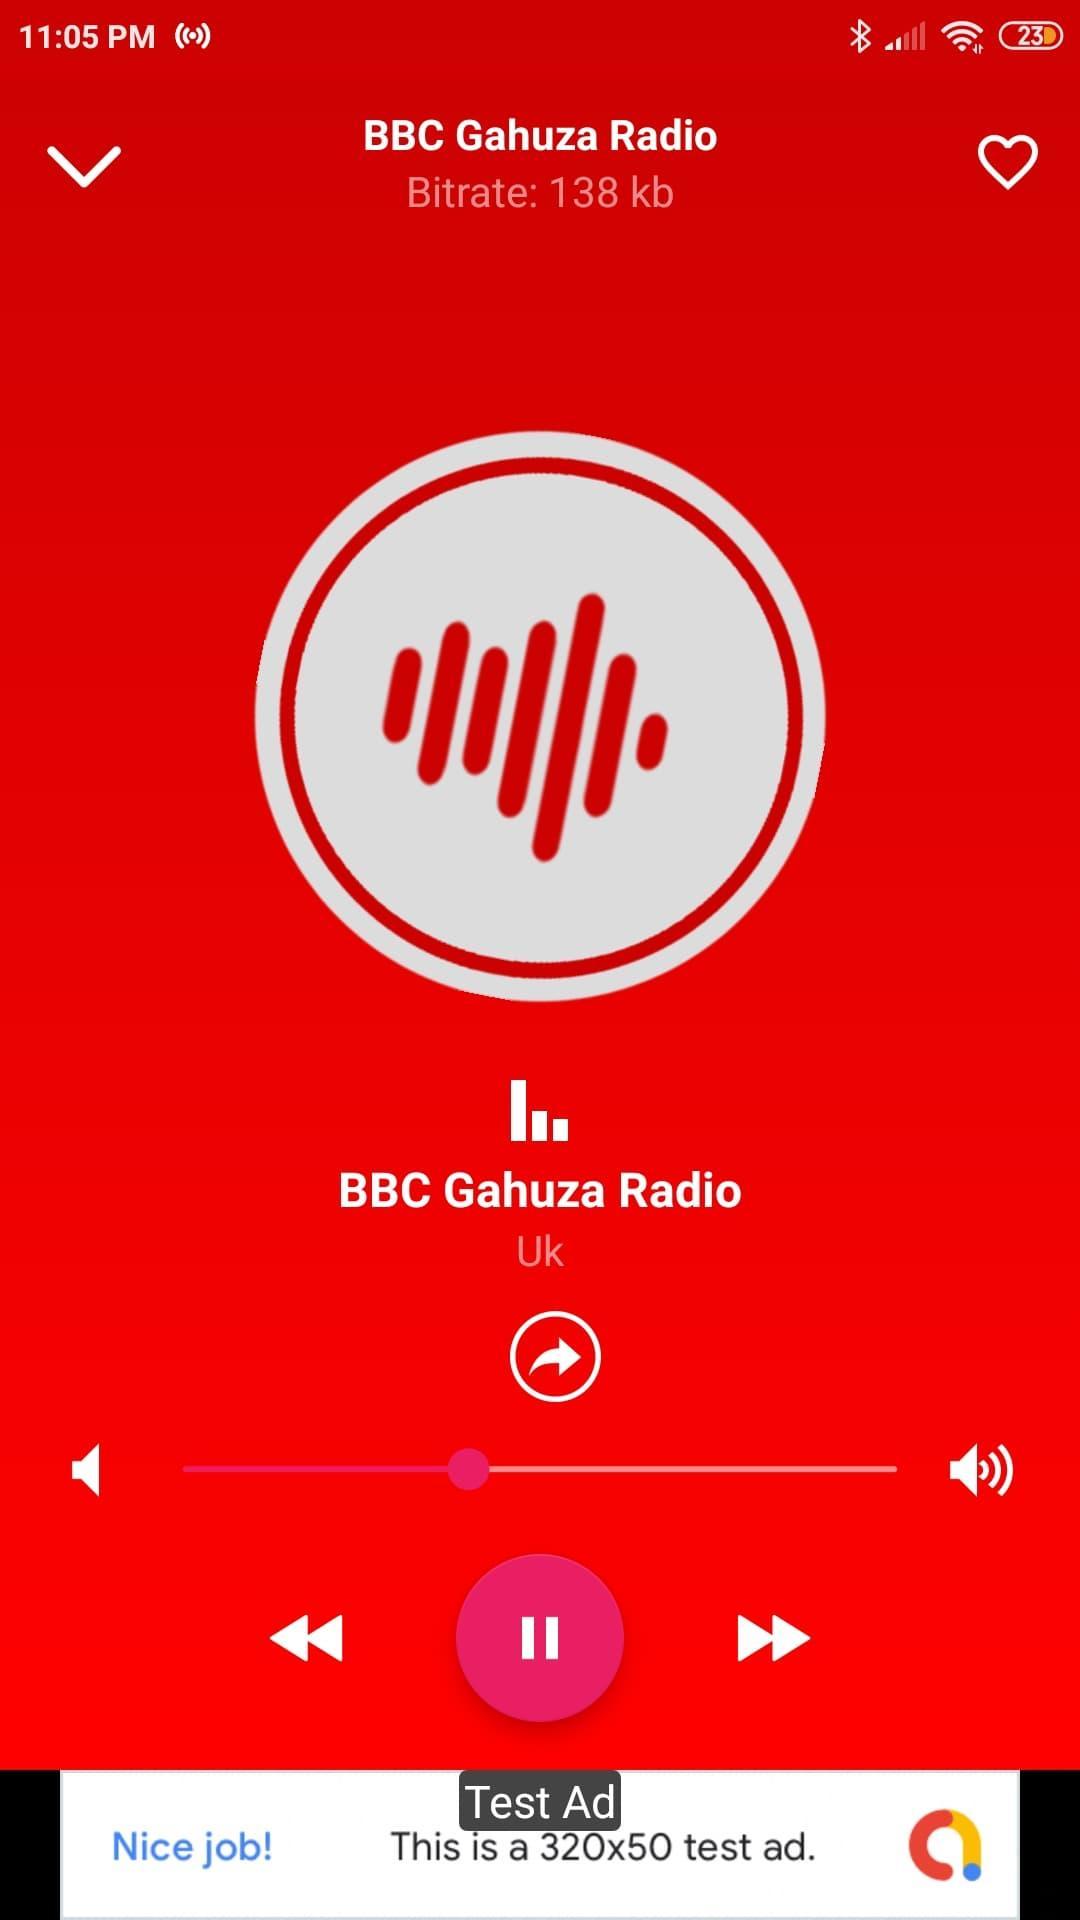 Uk BBC Gahuza App free listen Online for Android - APK Download